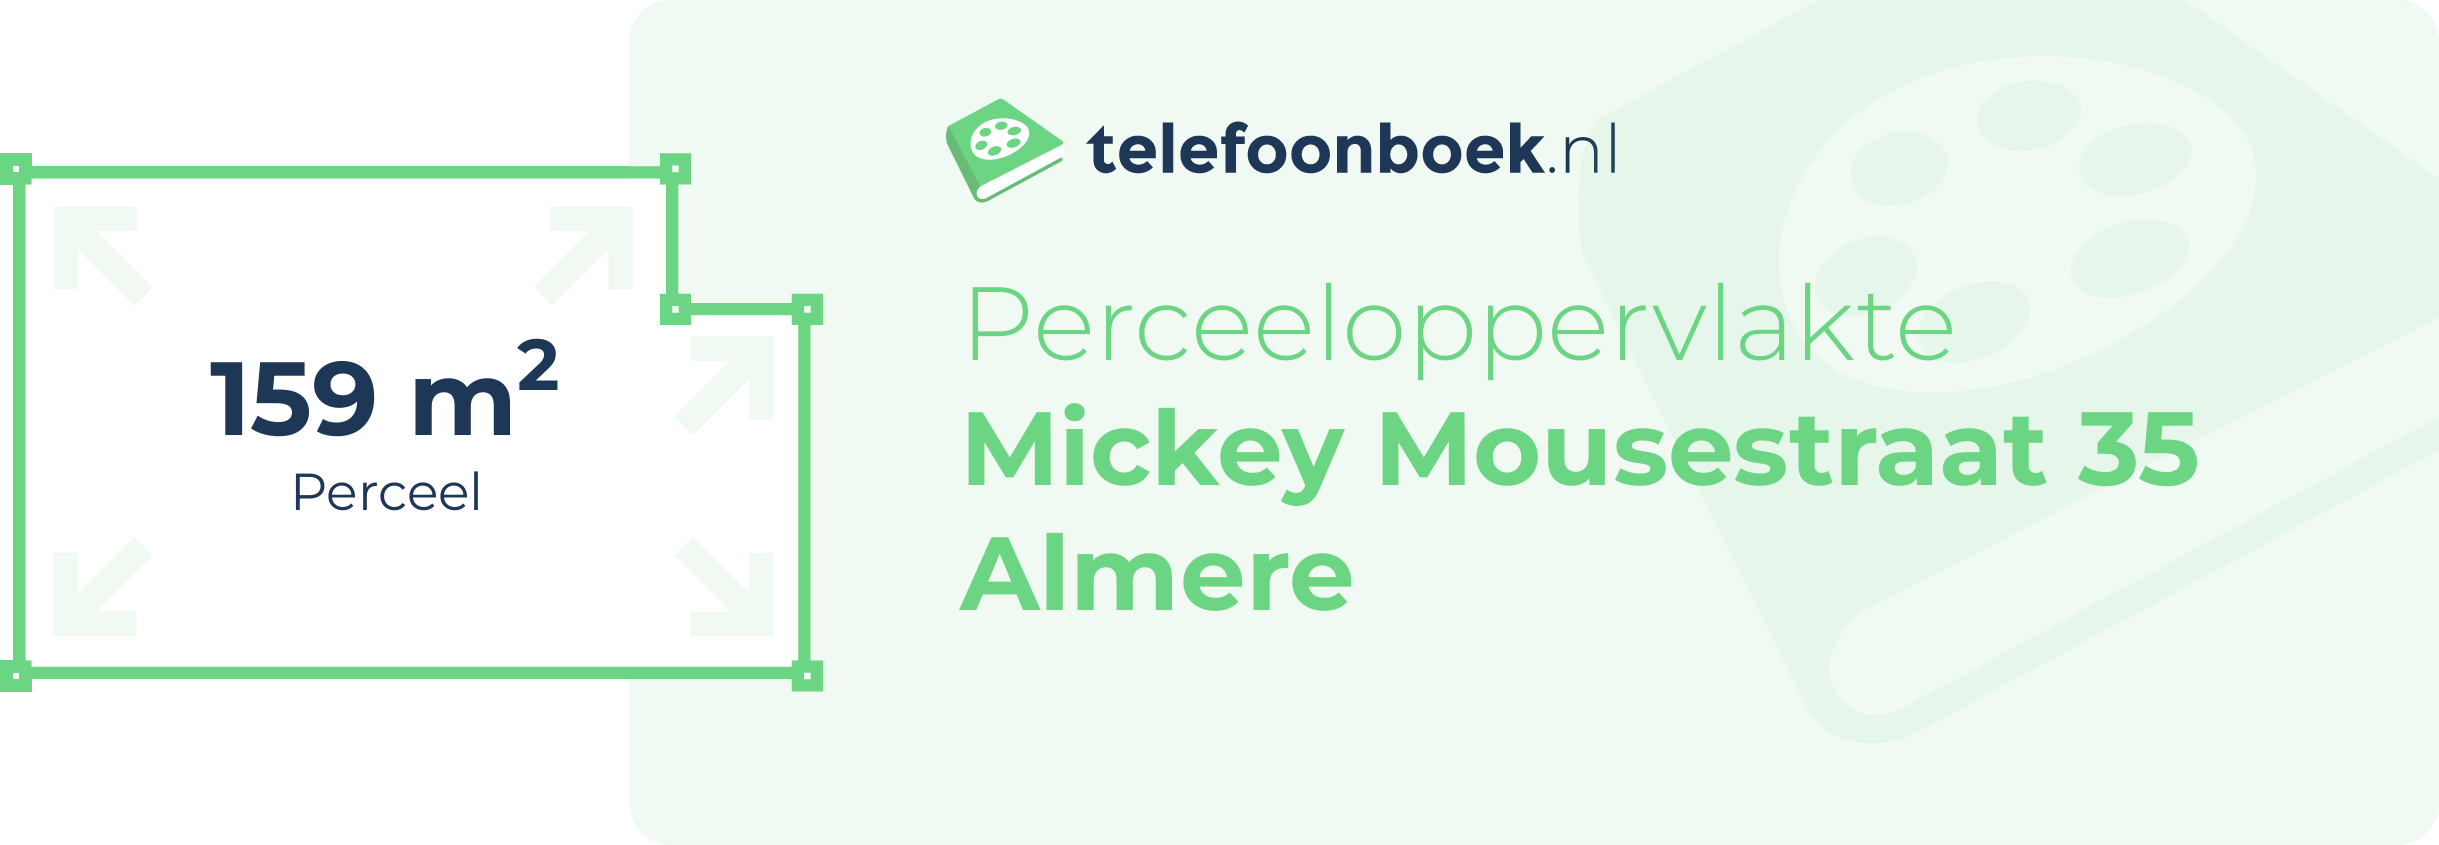 Perceeloppervlakte Mickey Mousestraat 35 Almere